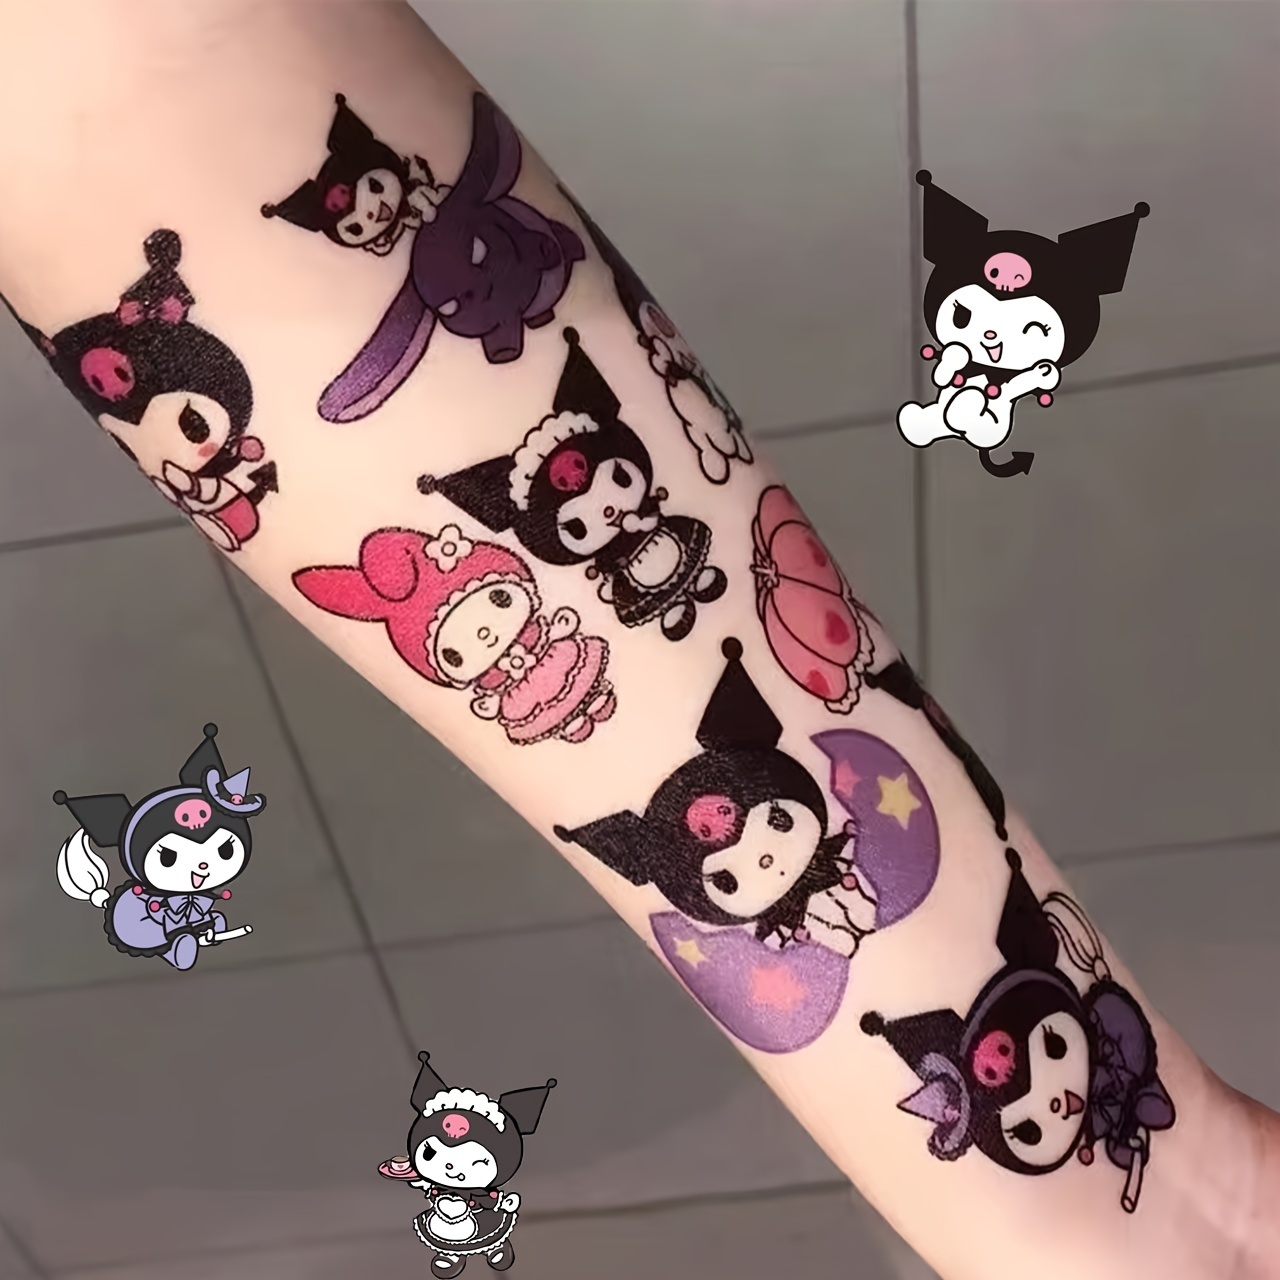 

30 Sheets Waterproof Tattoo Stickers, Long Lasting Temporary Tattoos, Series, Cartoon Hello Kitty Pattern, Face Arm Back Leg Stickers Body Art